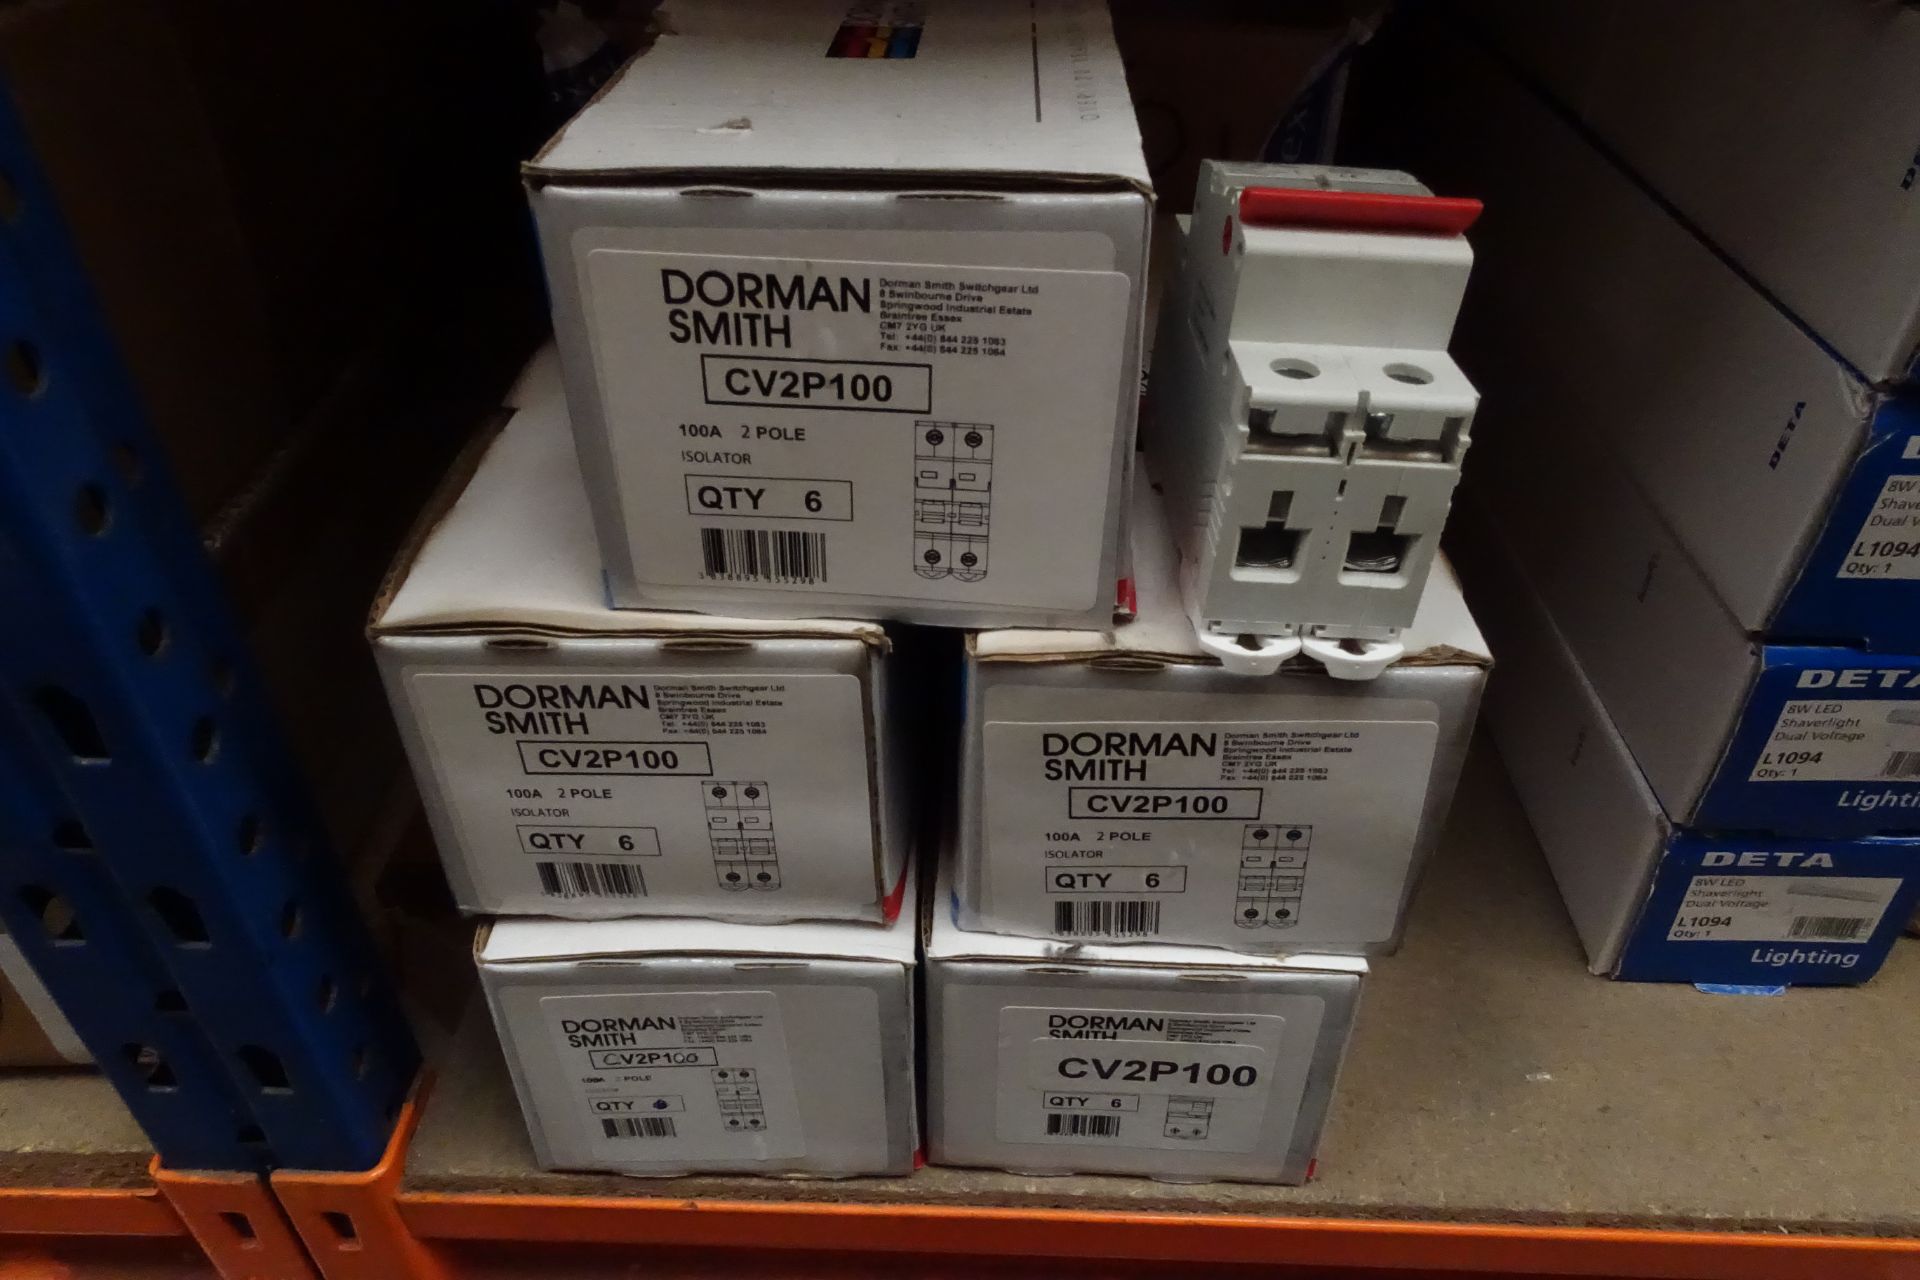 60 x DORMAN SMITH CV2P100 100Amp 2 Pole Isolators